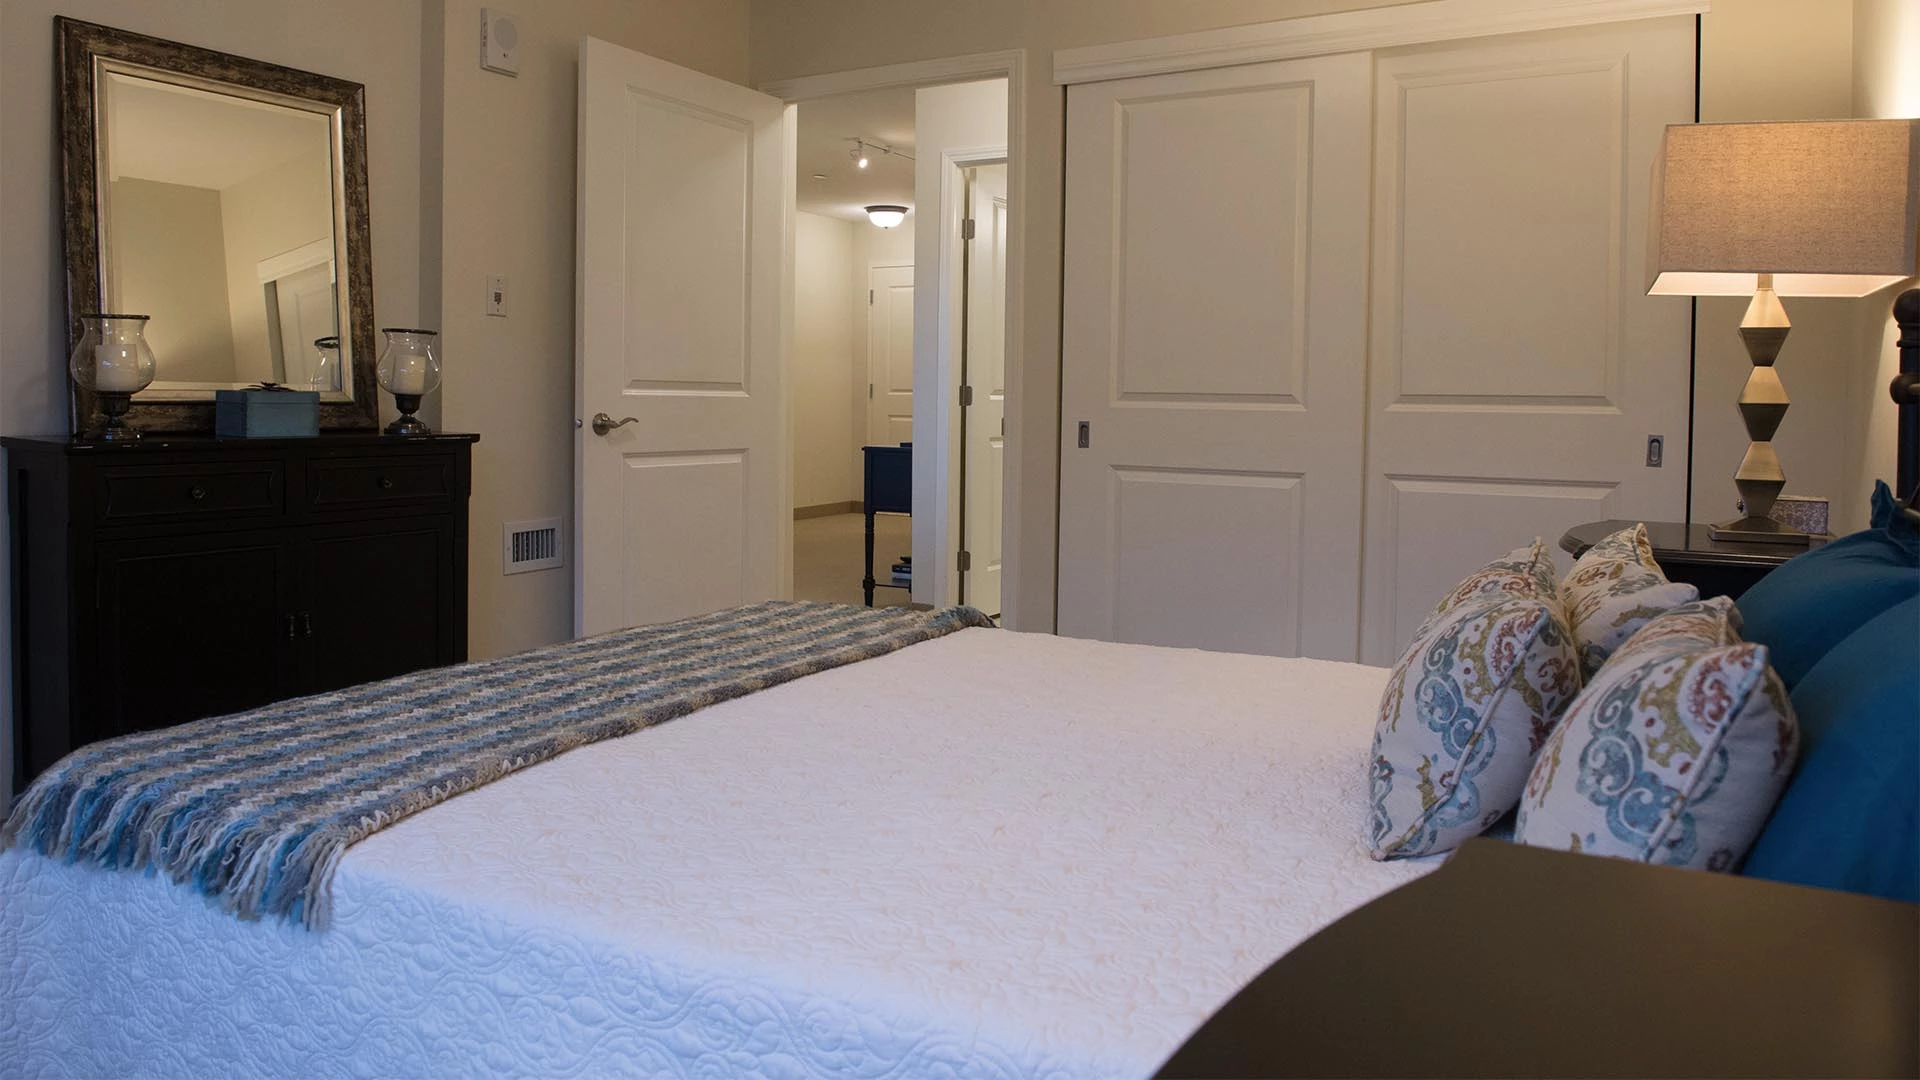 A bed and dresser in an Everitt Gardens suite